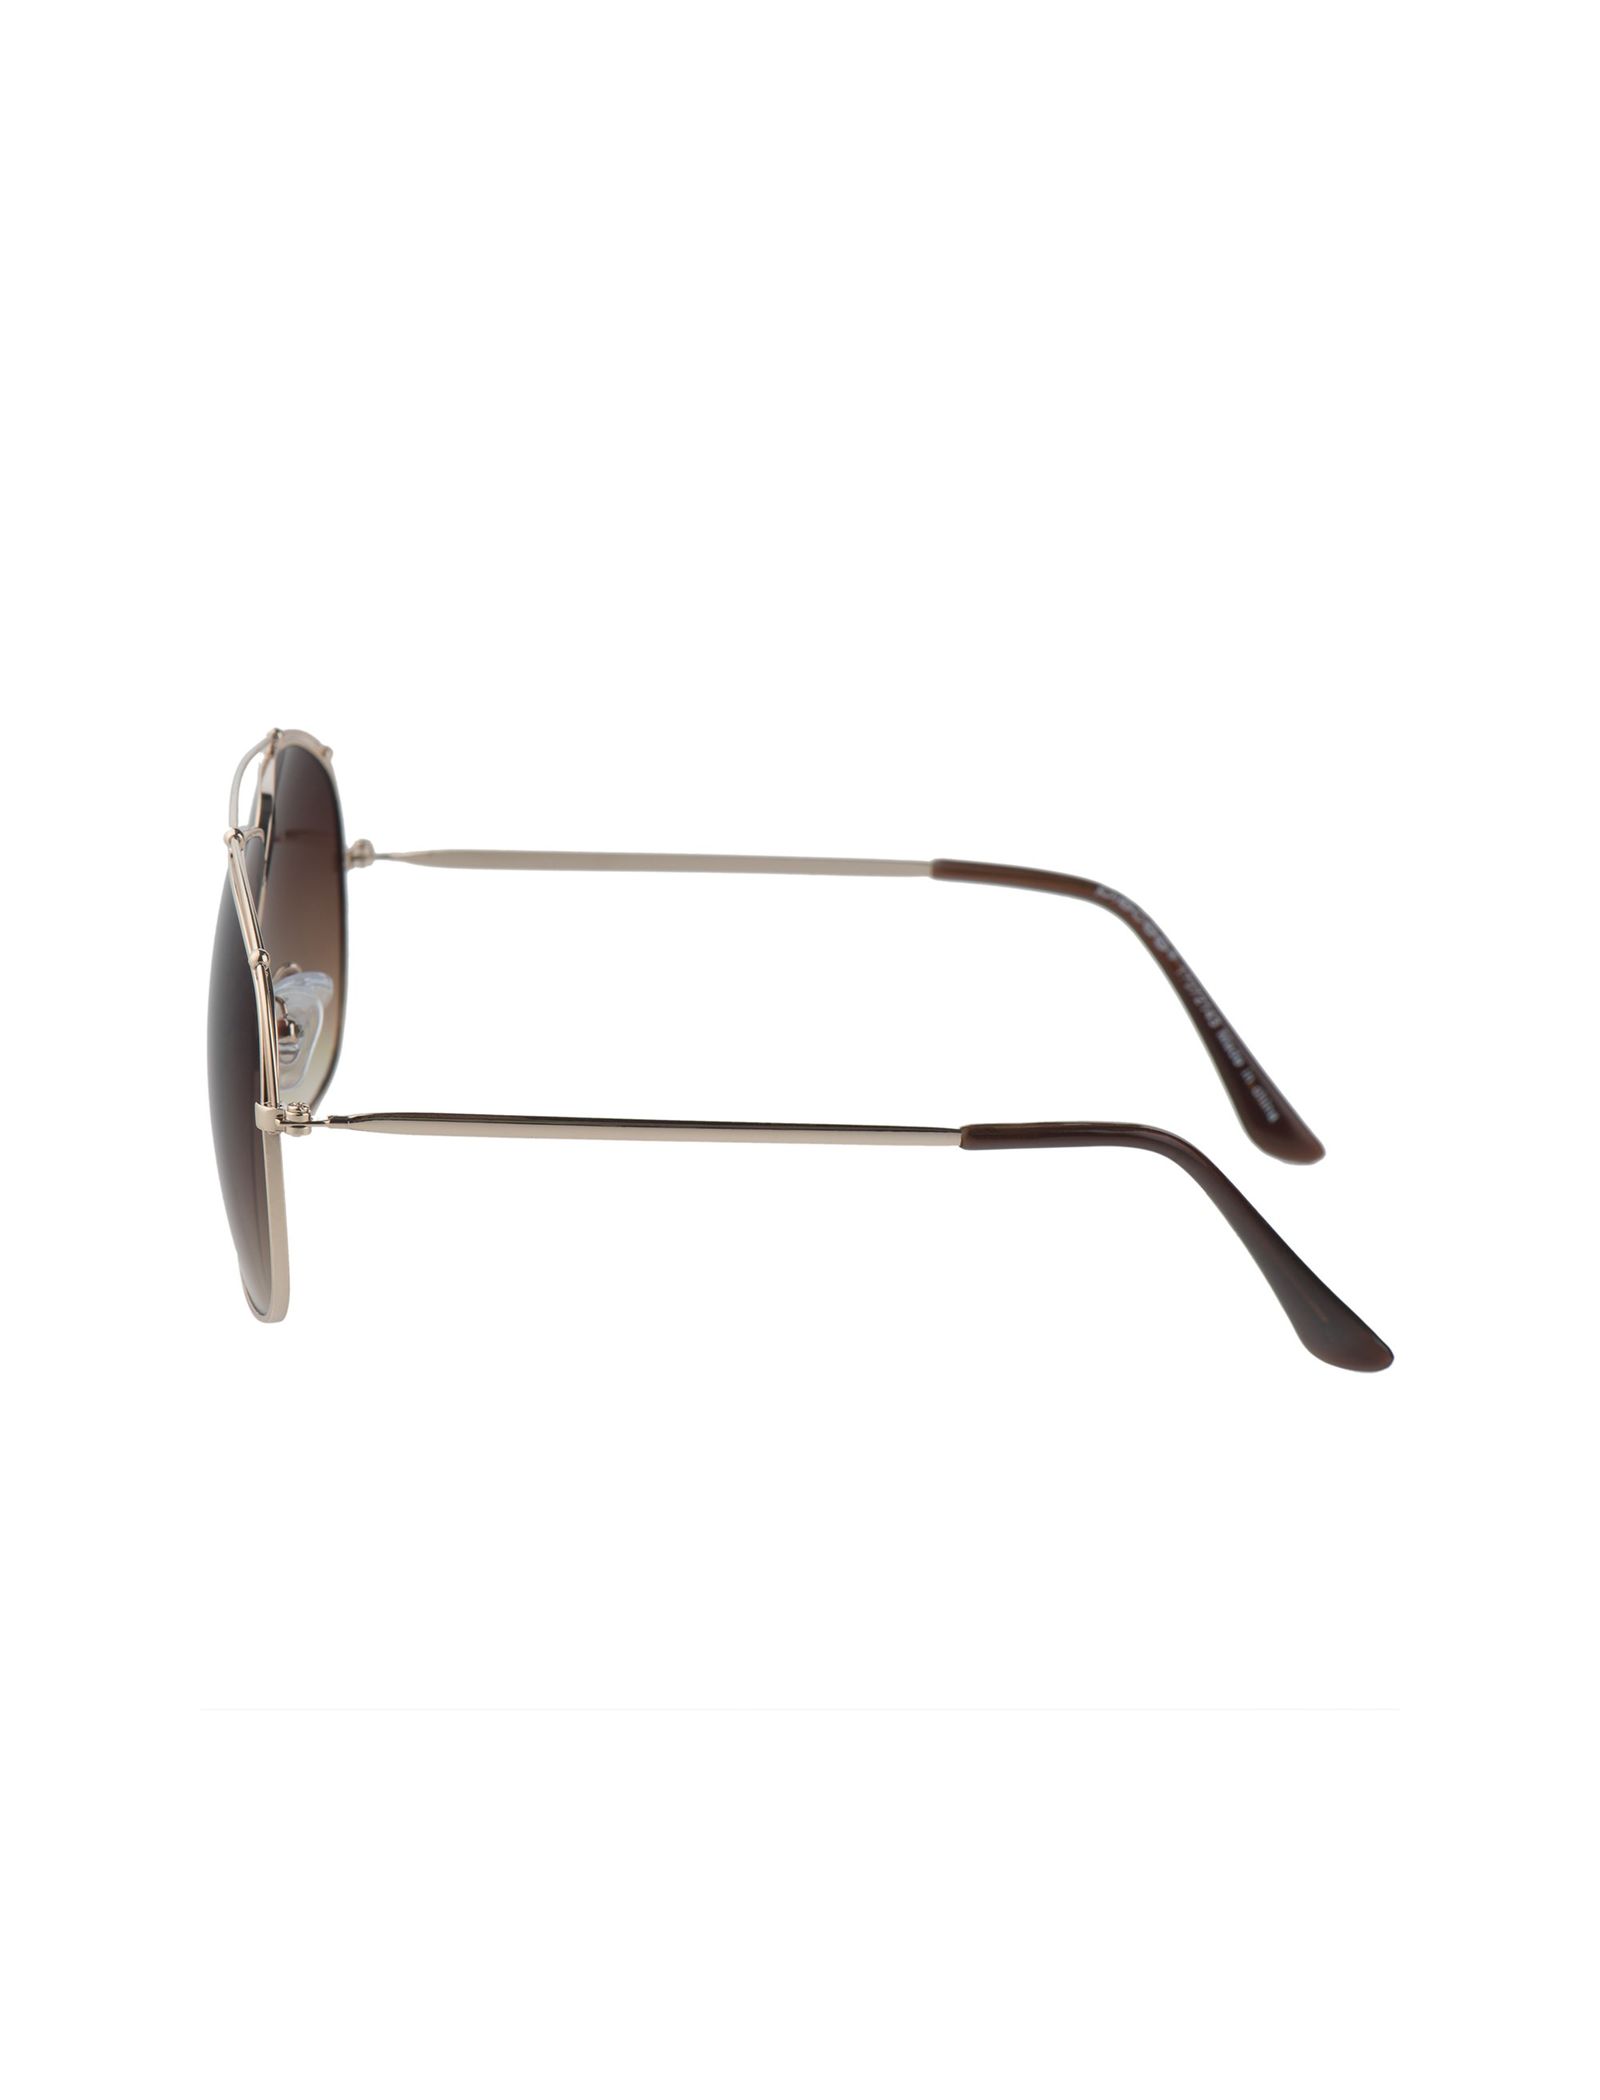 عینک آفتابی خلبانی زنانه - پی سز - طلايي - 3